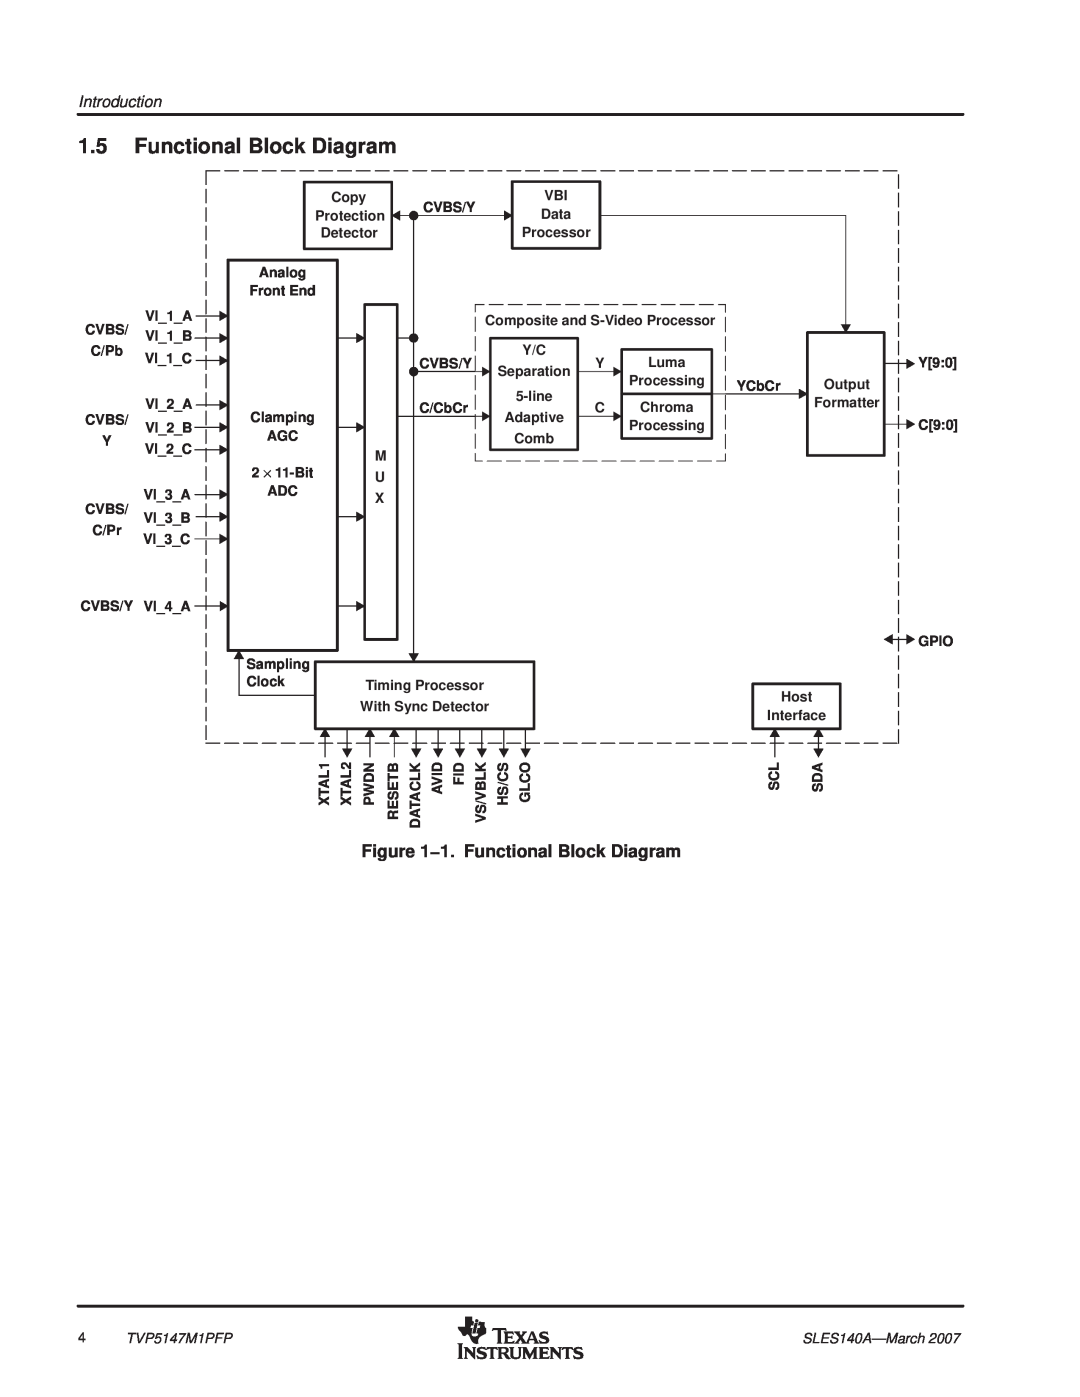 Texas Instruments TVP5147M1PFP manual 1. Functional Block Diagram 